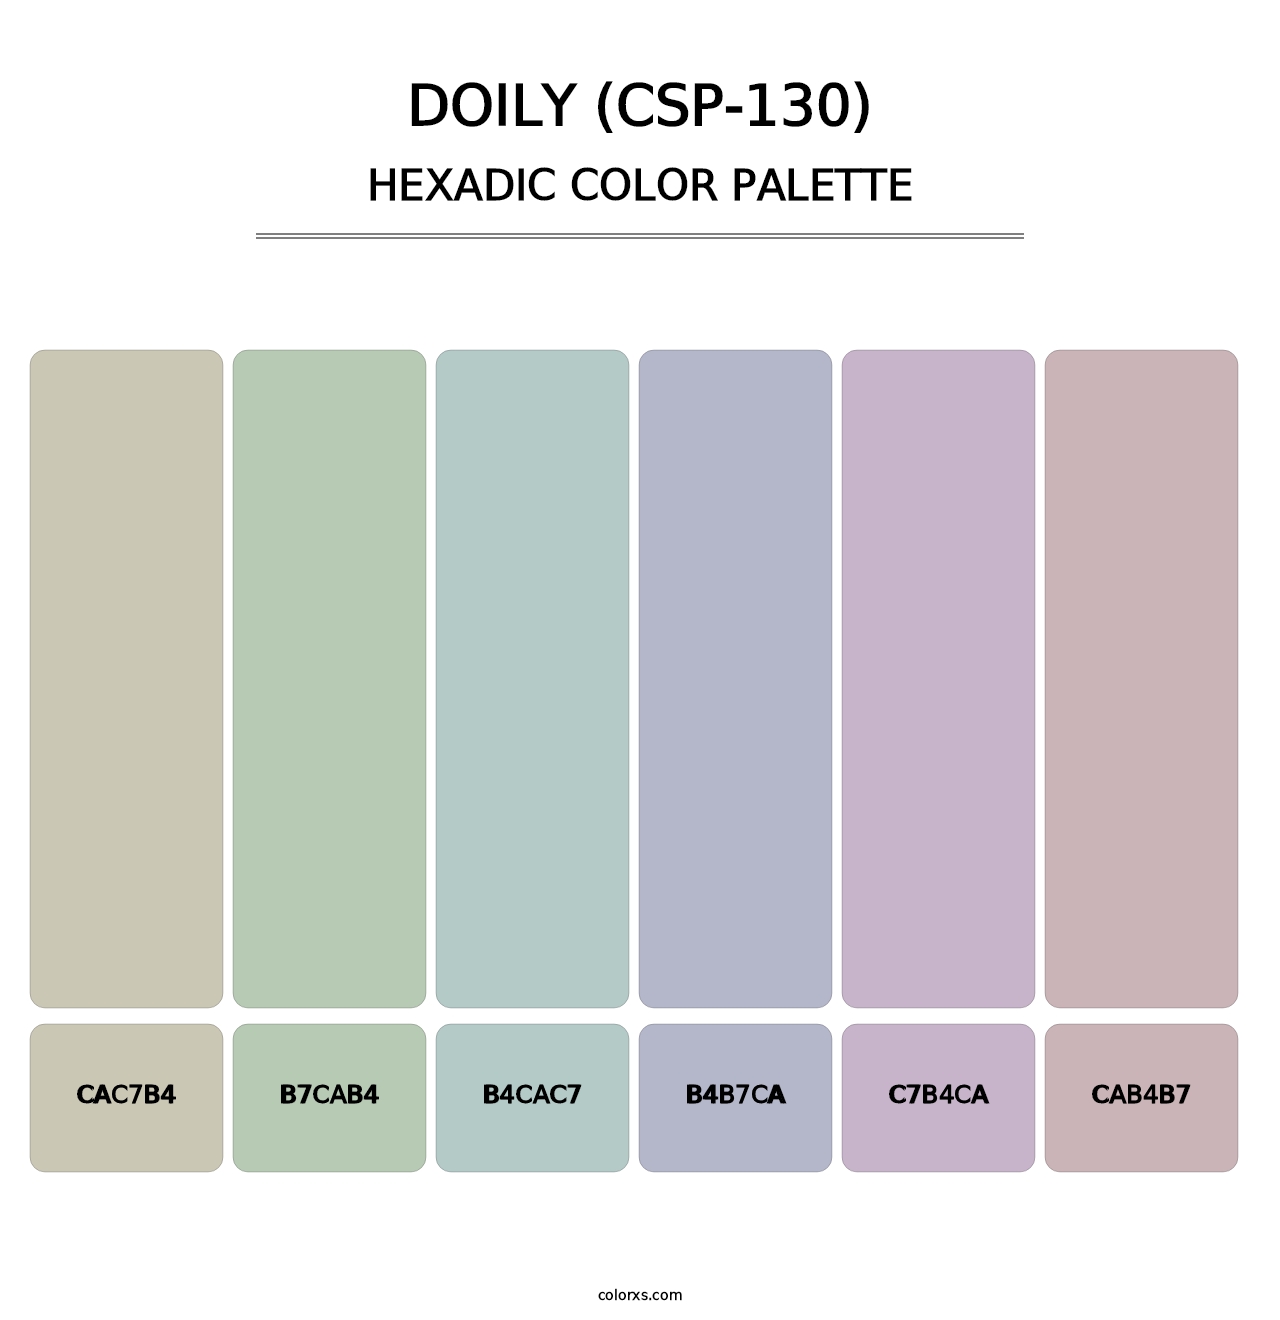 Doily (CSP-130) - Hexadic Color Palette